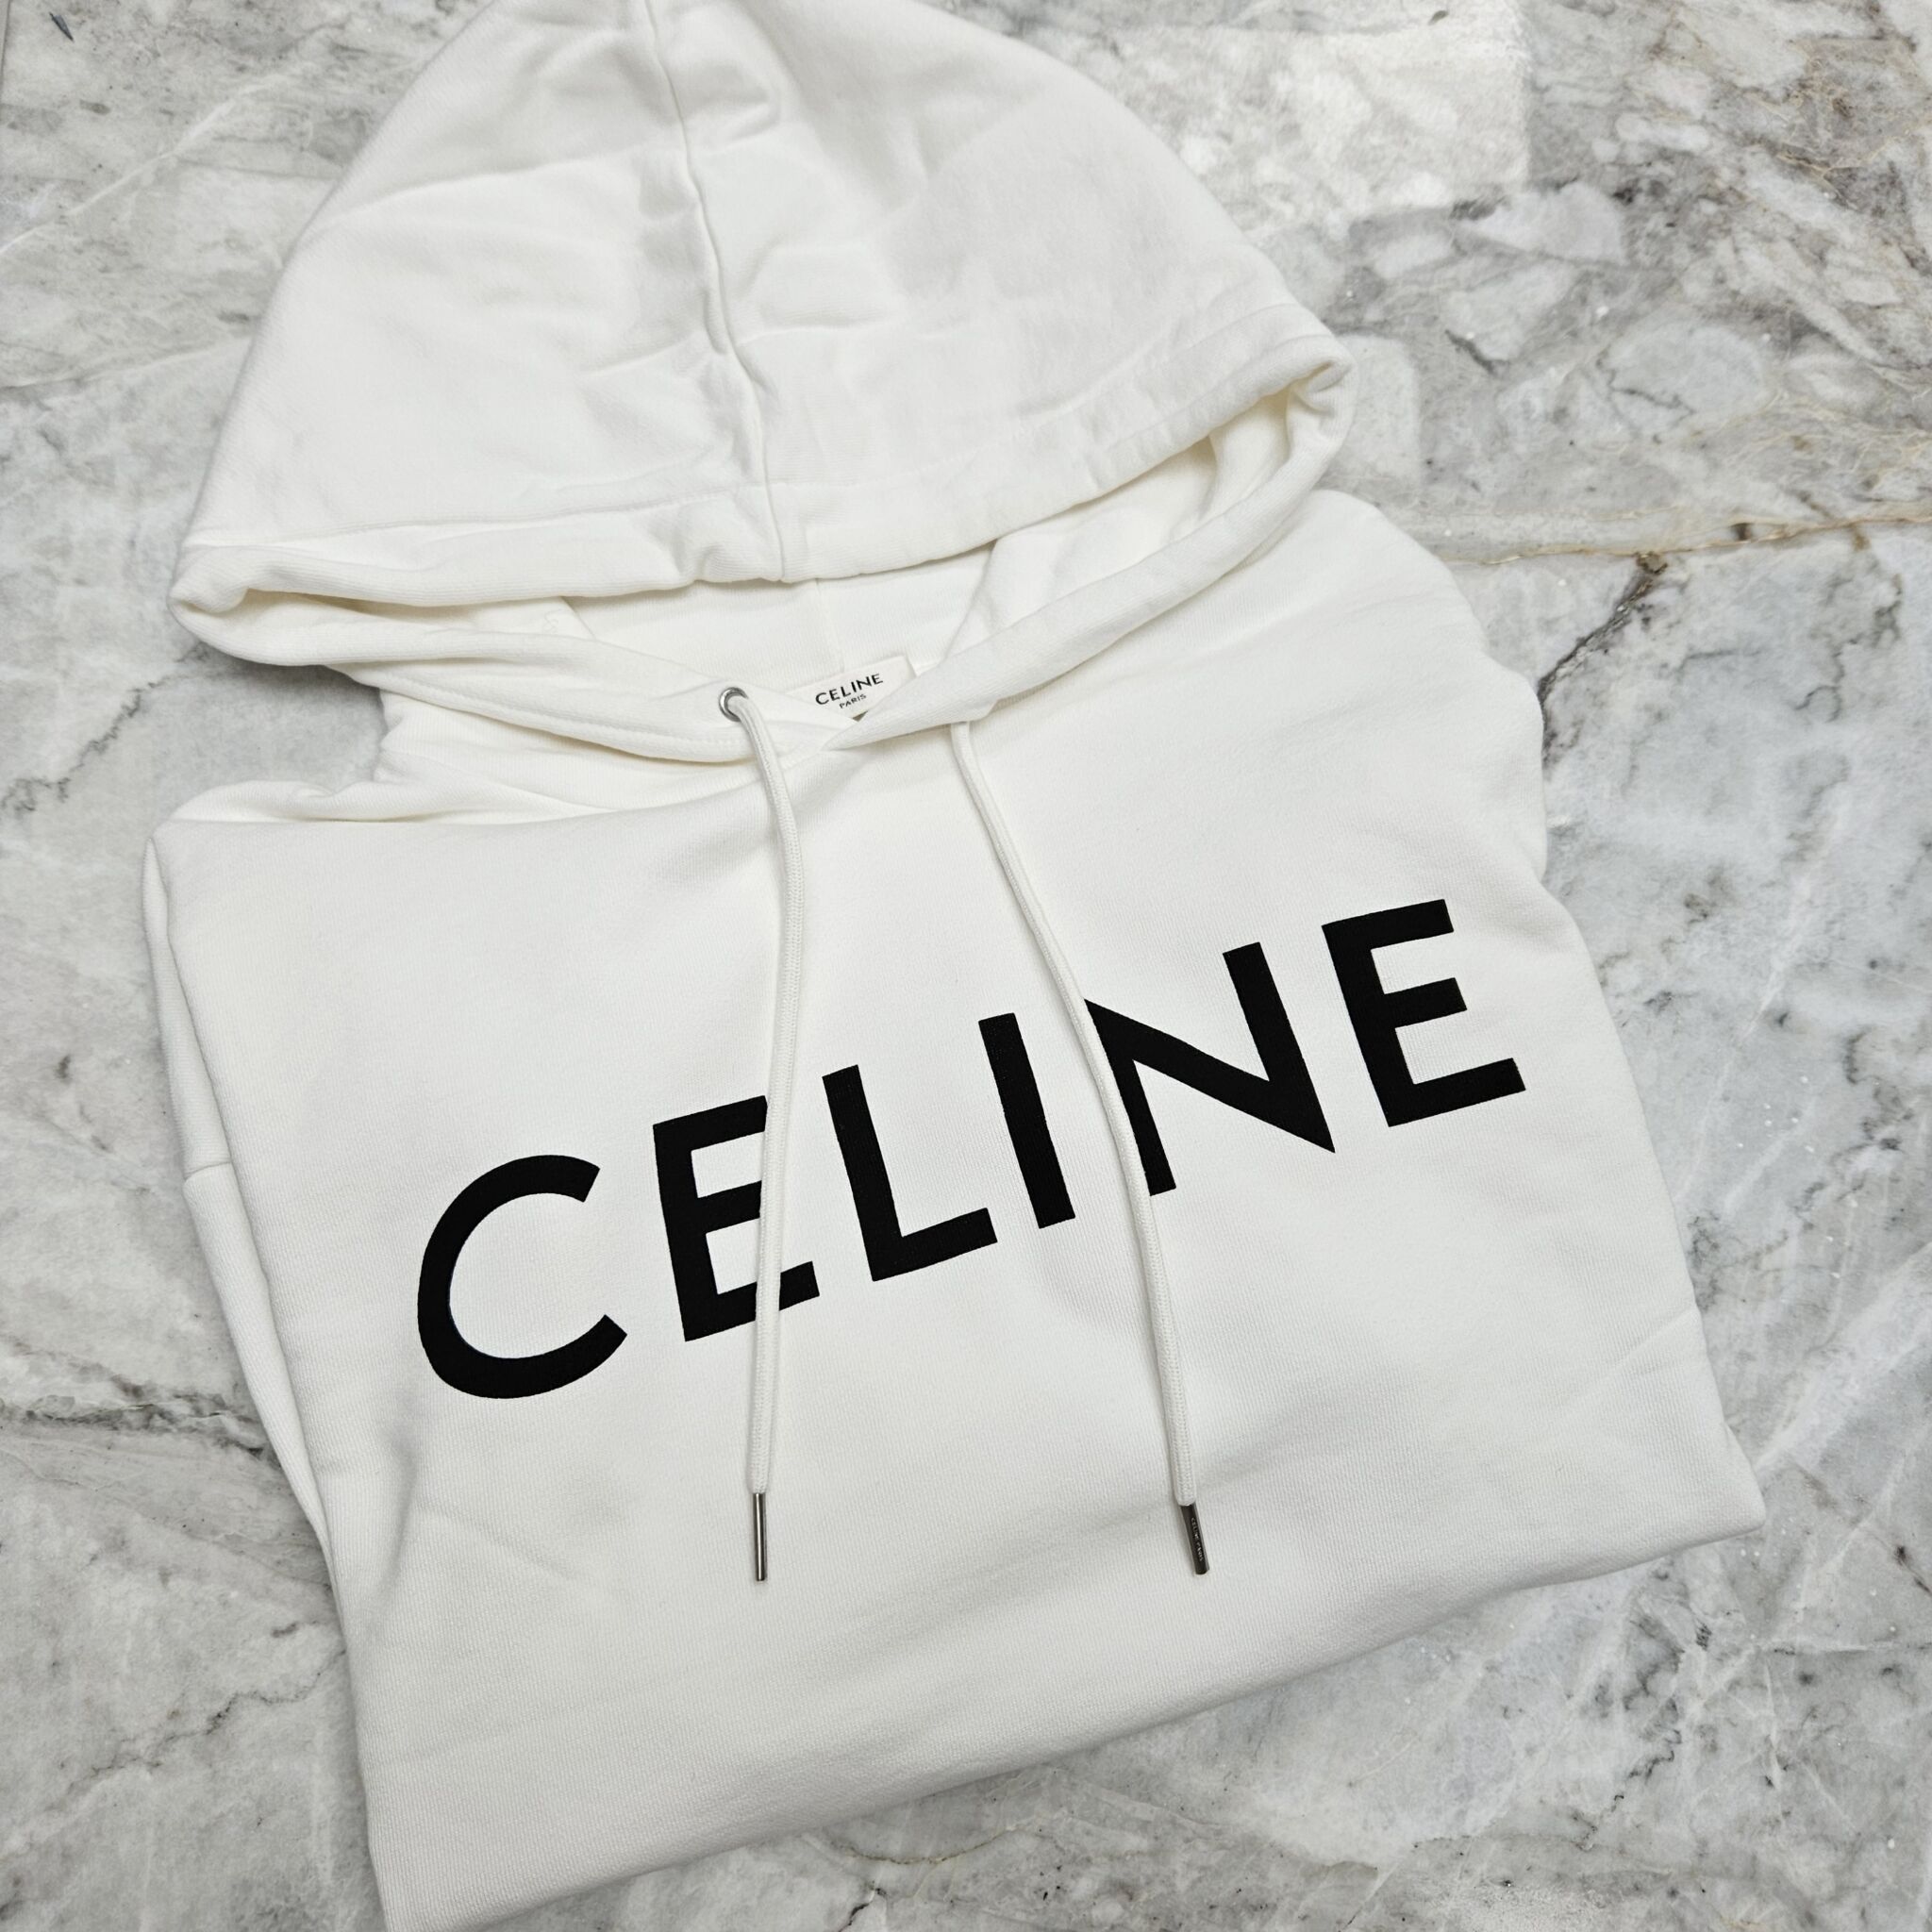 Celine Hoodie, Cotton, White/black, Small - Laulay Luxury